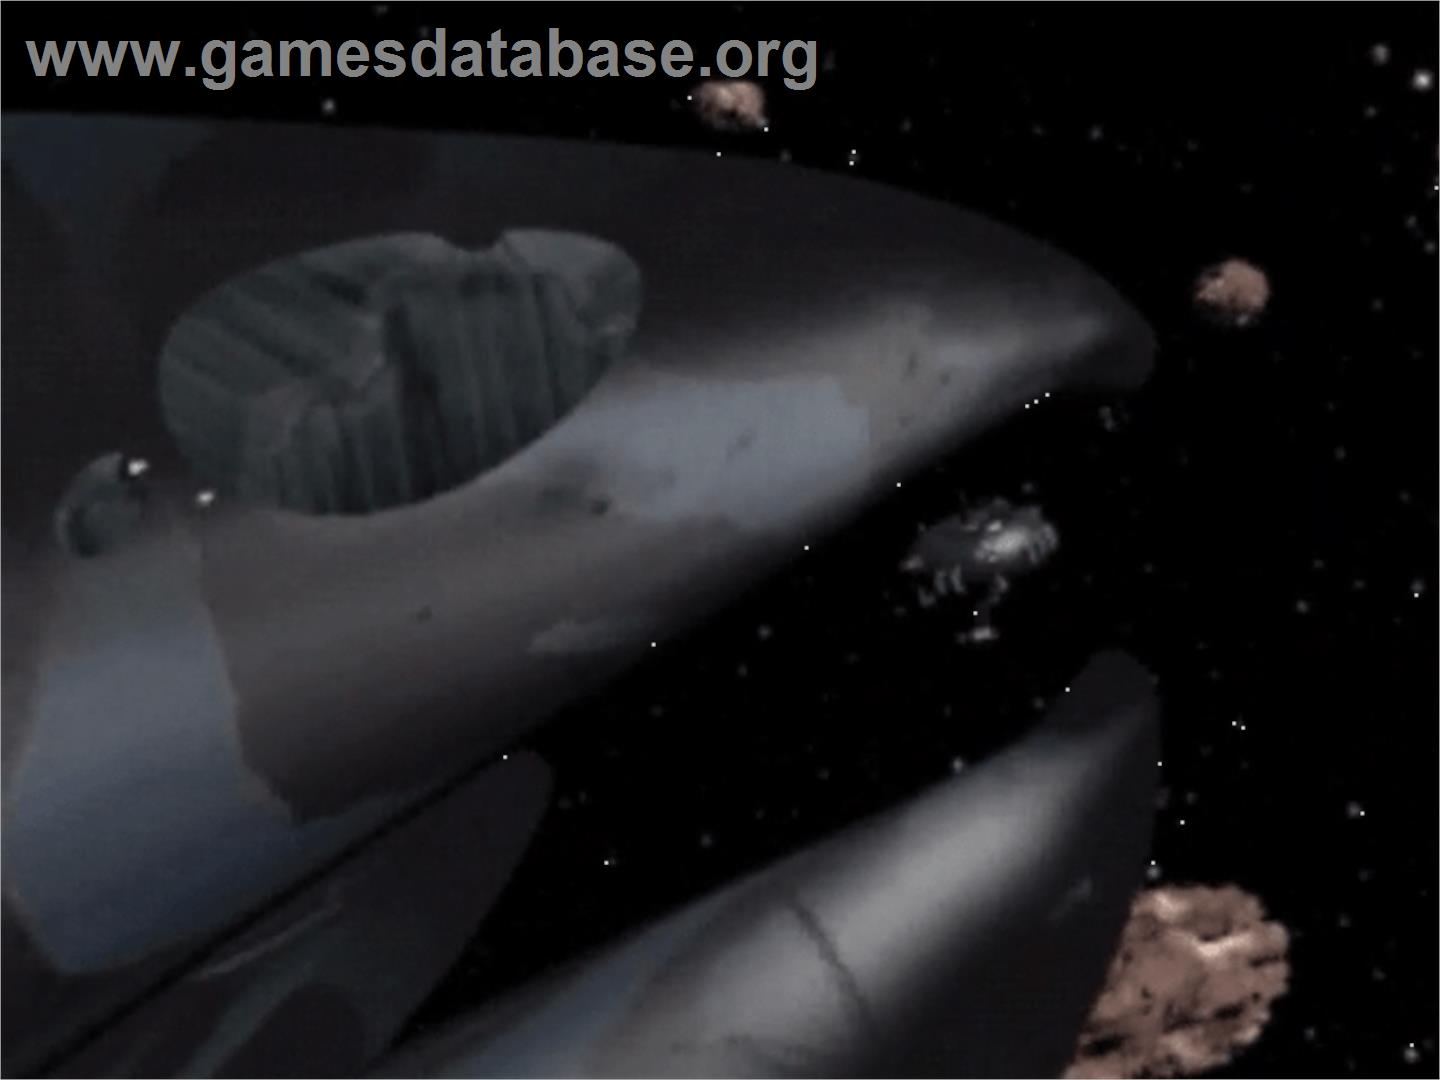 Daedalus Encounter - Panasonic 3DO - Artwork - In Game